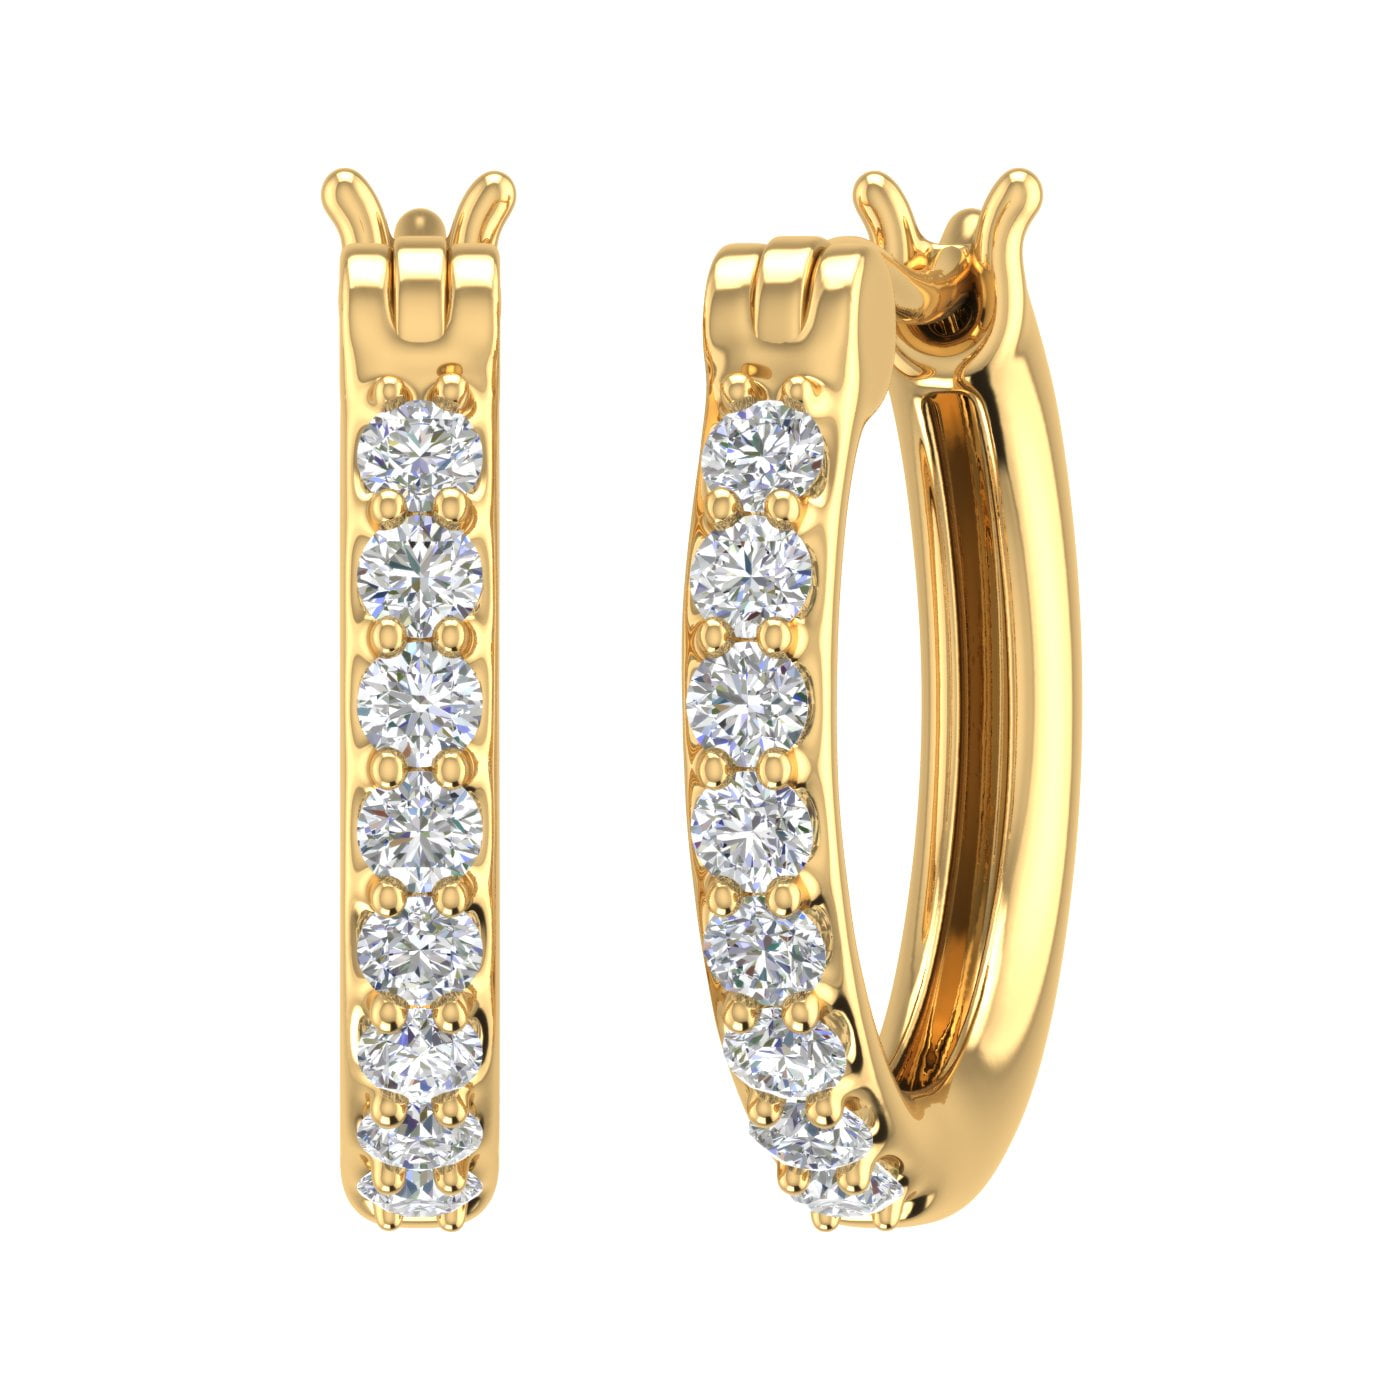 1/4 Carat Diamond Hoop Earrings in 10K Yellow Gold - Walmart.com